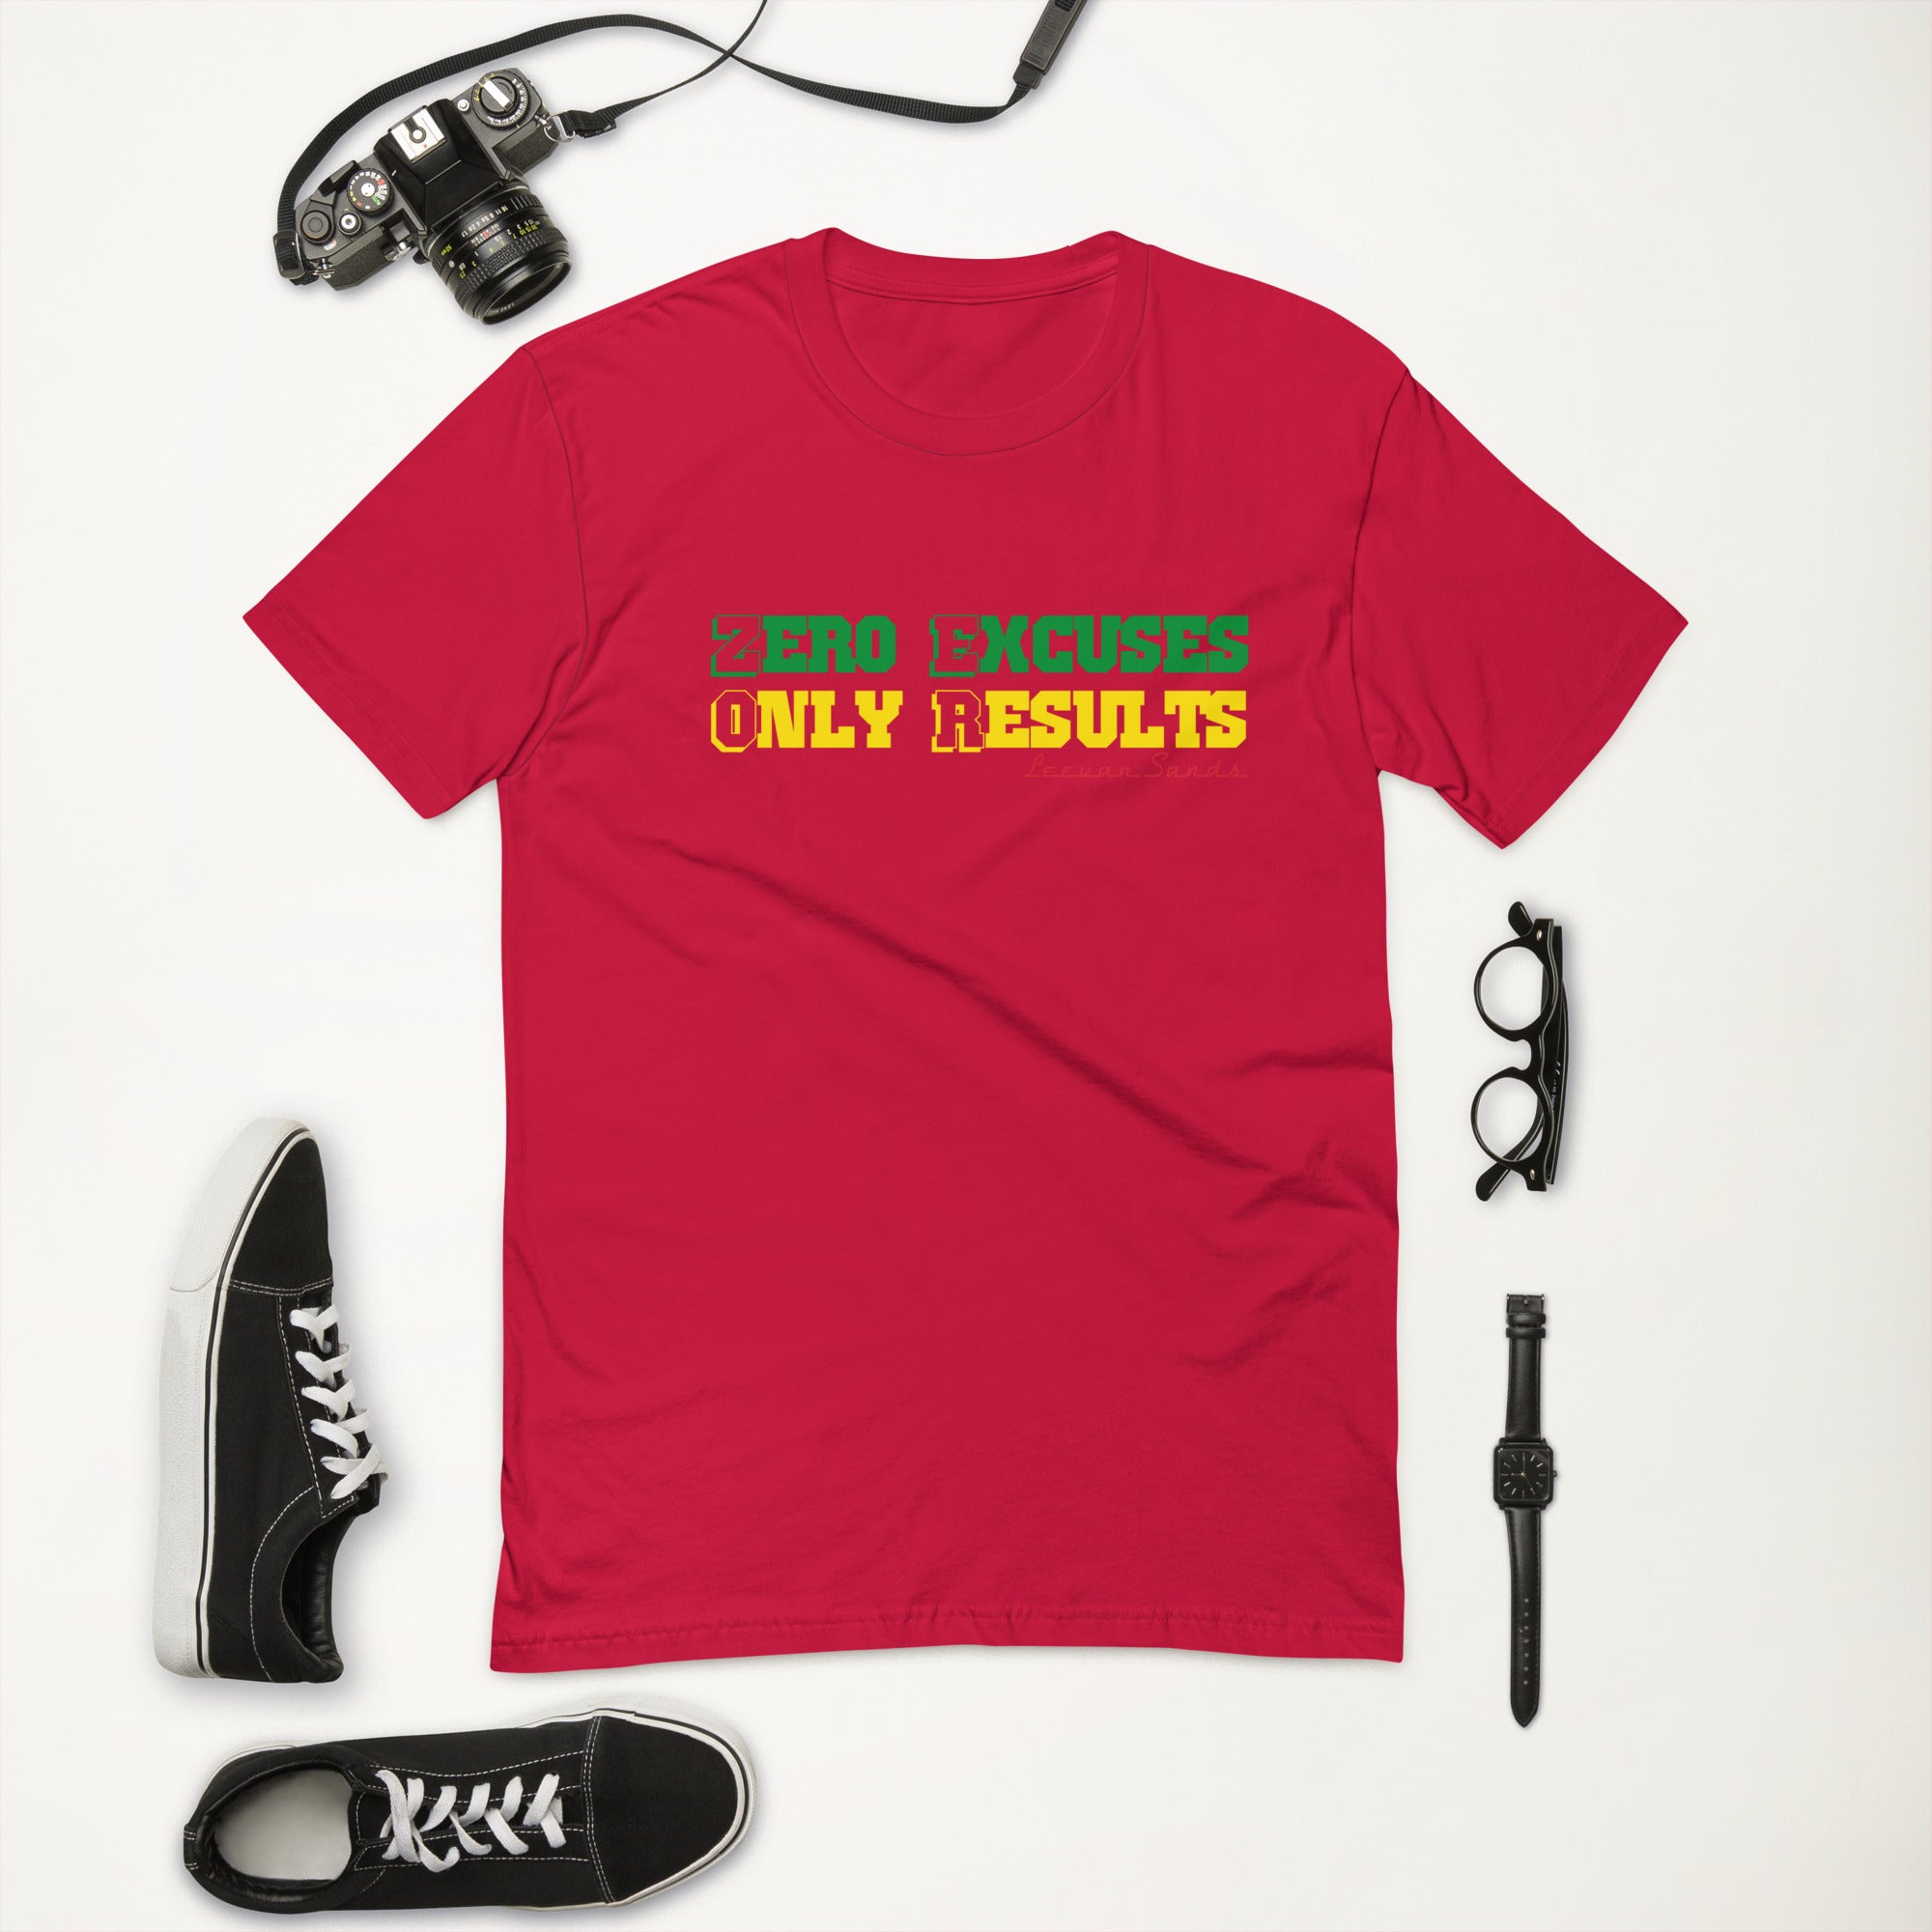 ZEOR - Rasta T-shirt